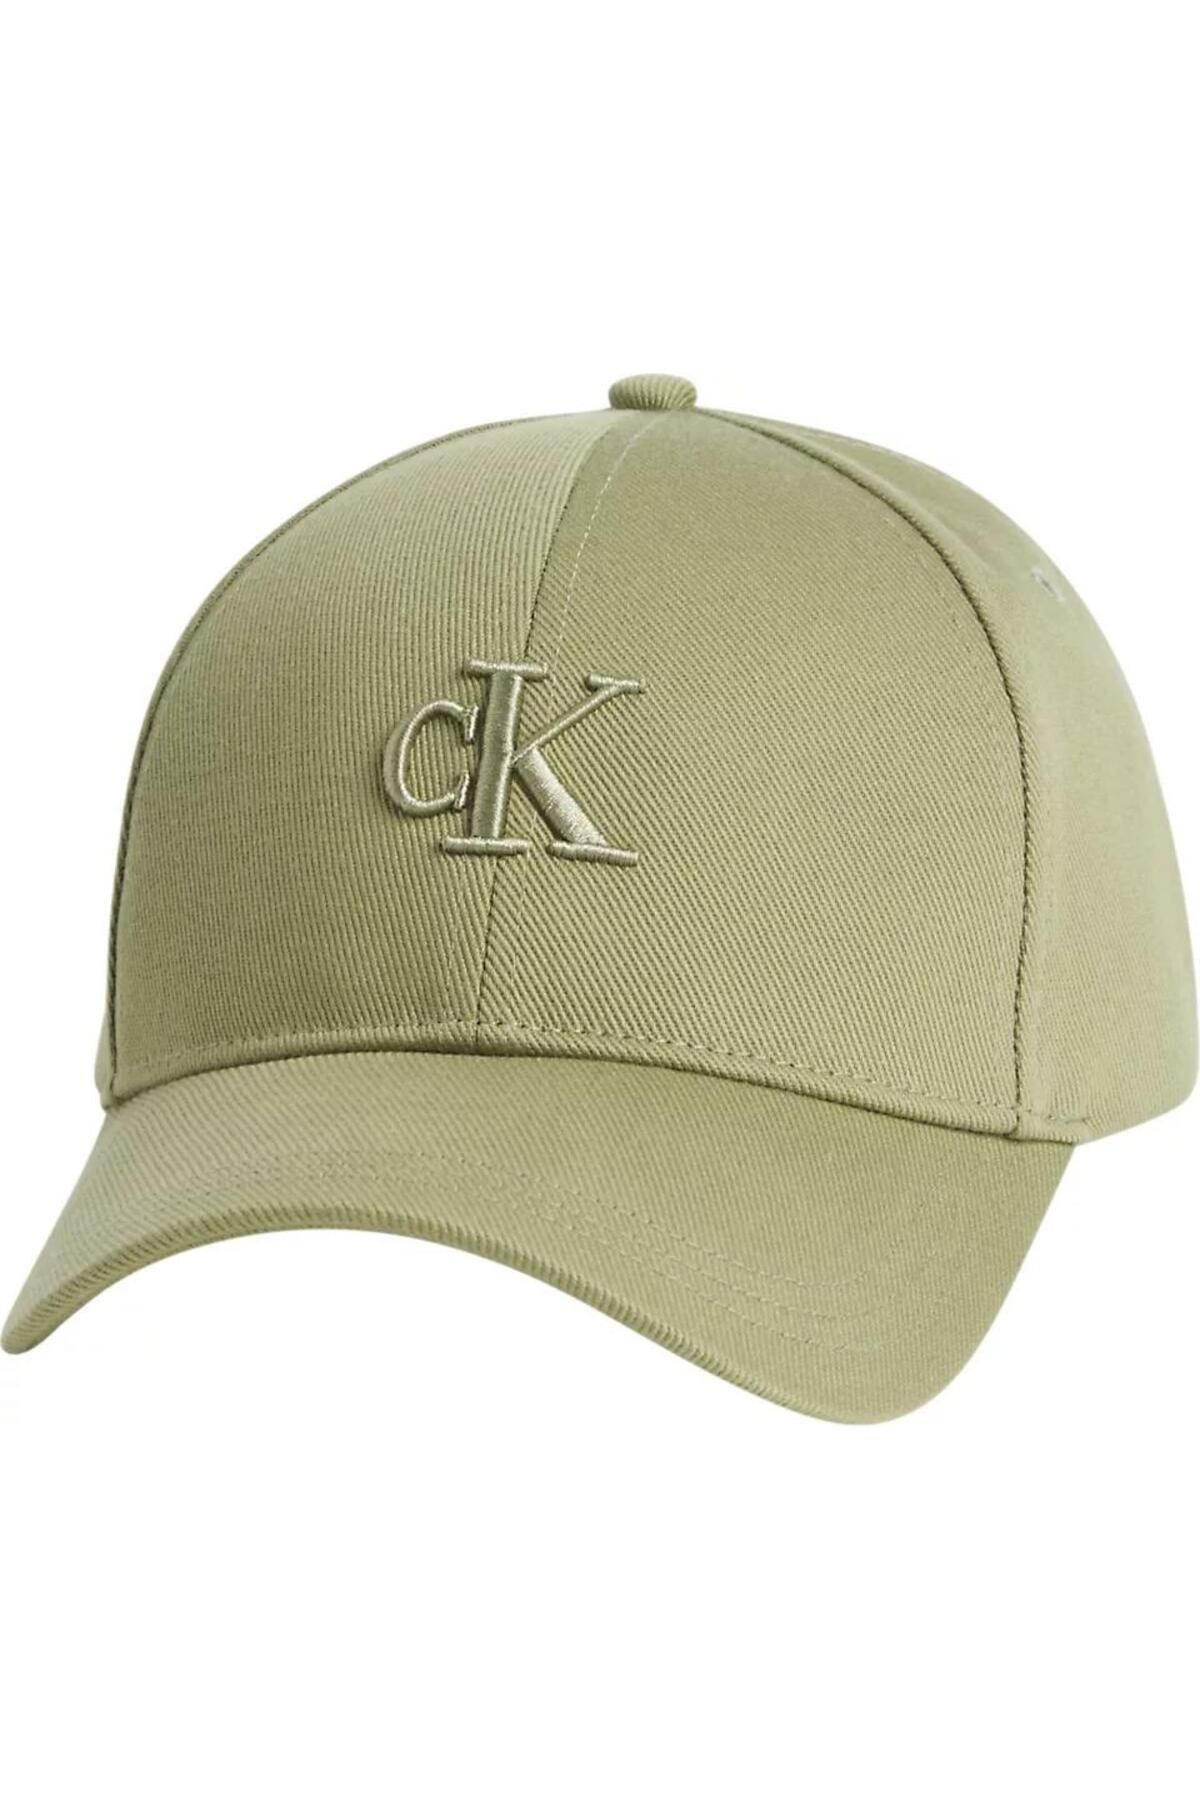 Calvin Klein NEW ARCHIVE CAP